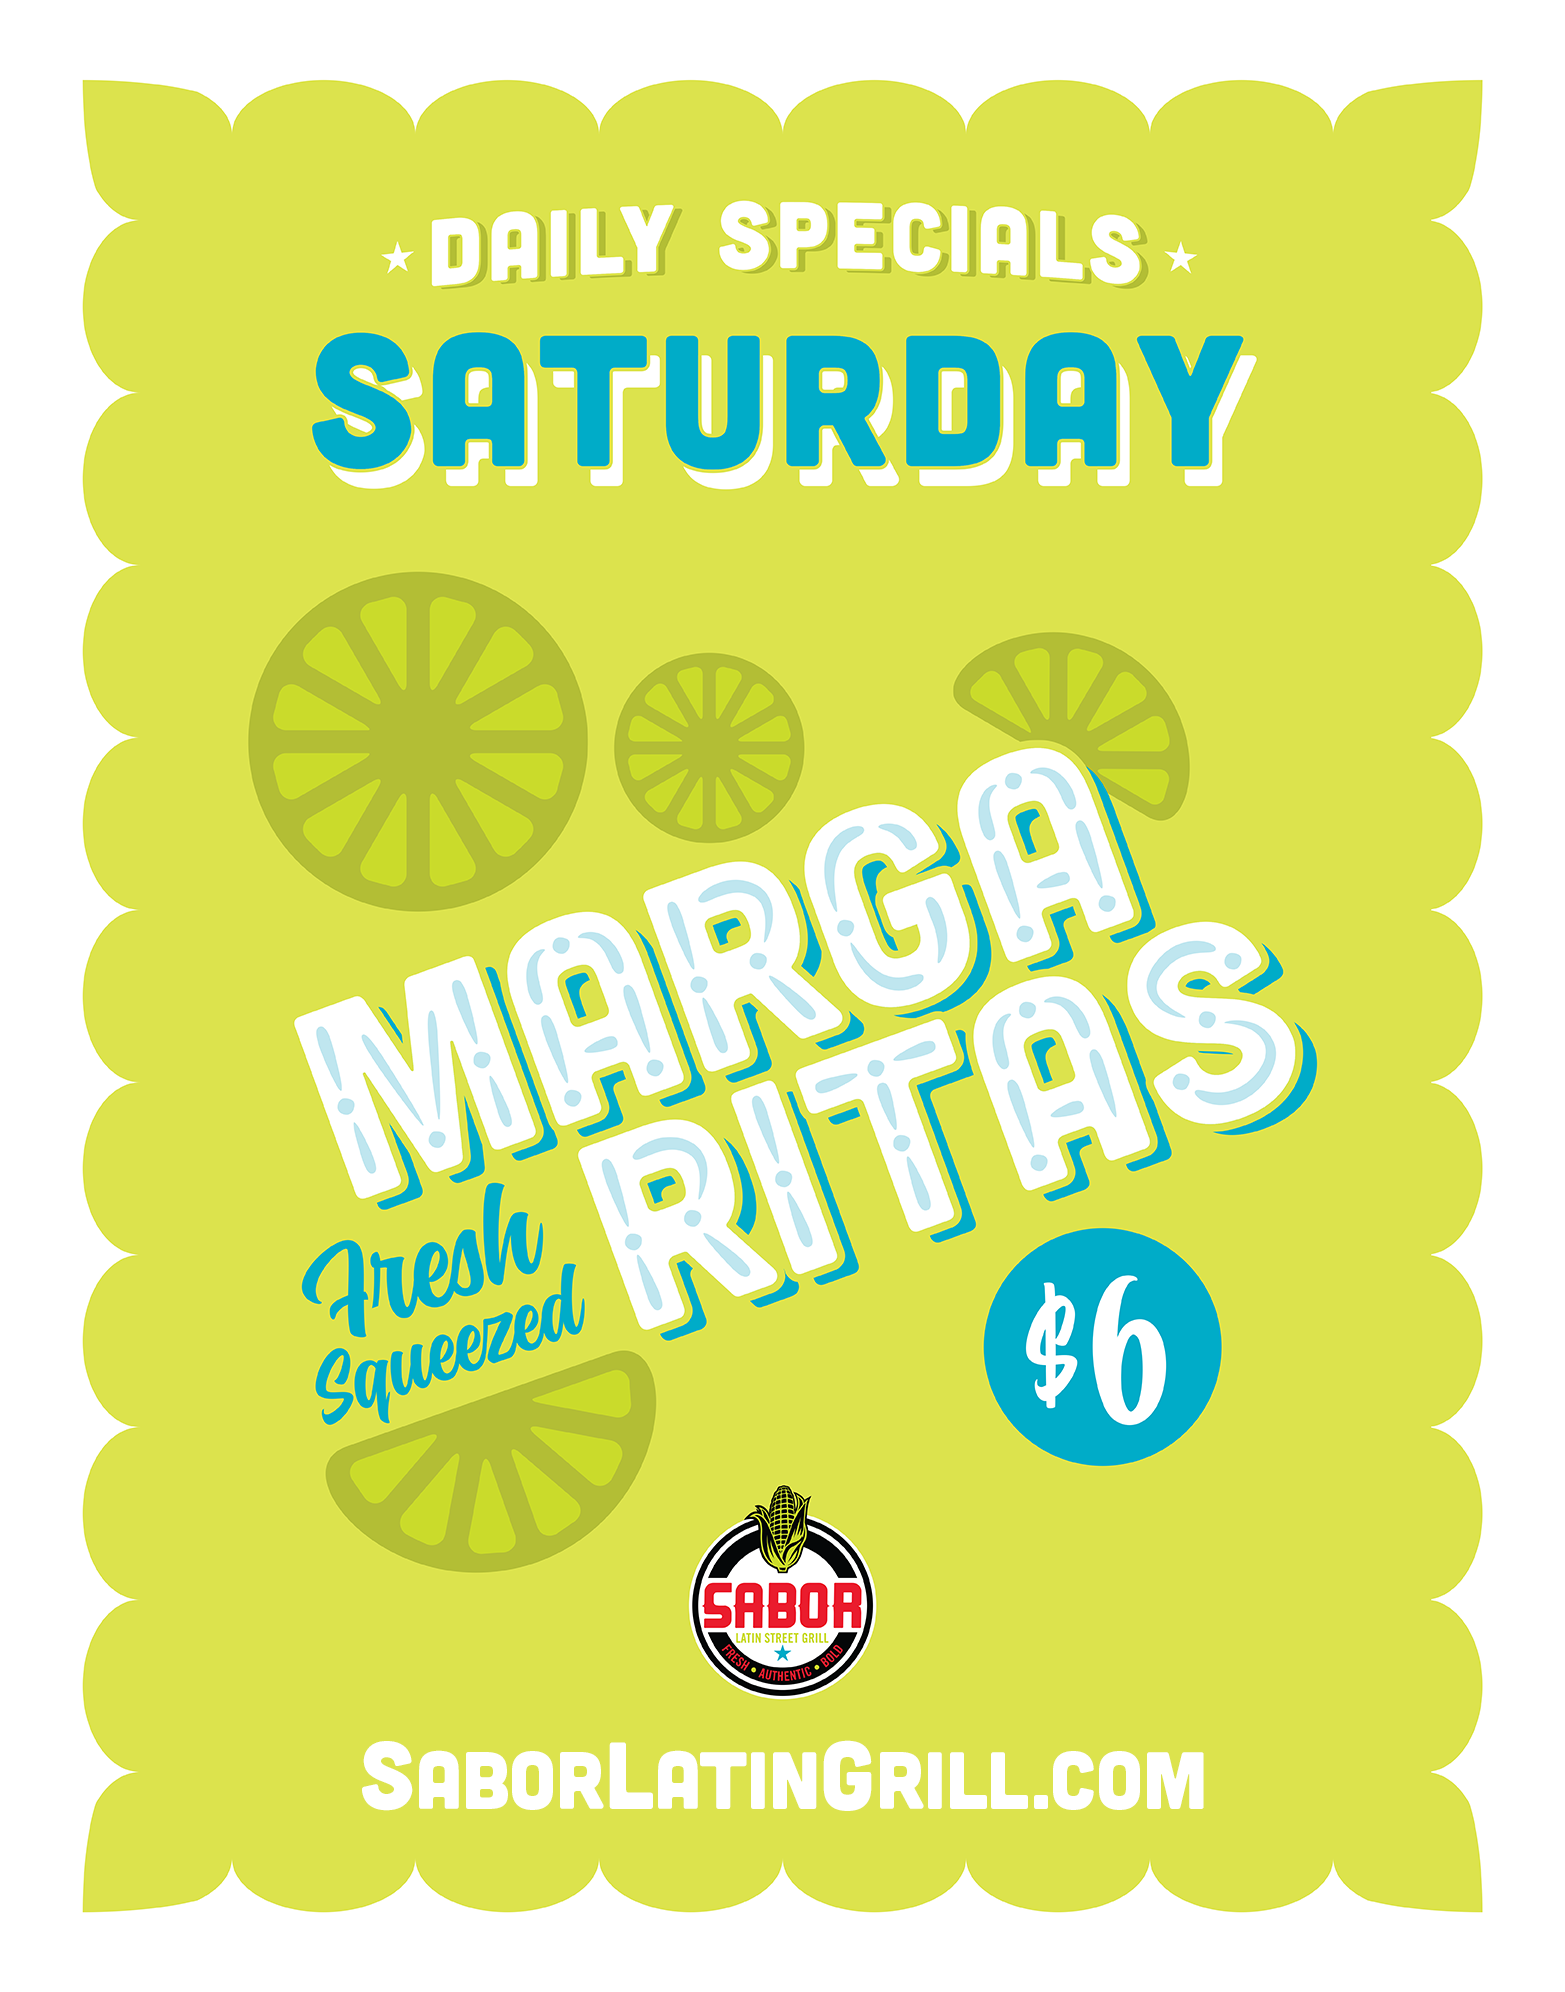 Saturdays - $6 Amigos Margarita